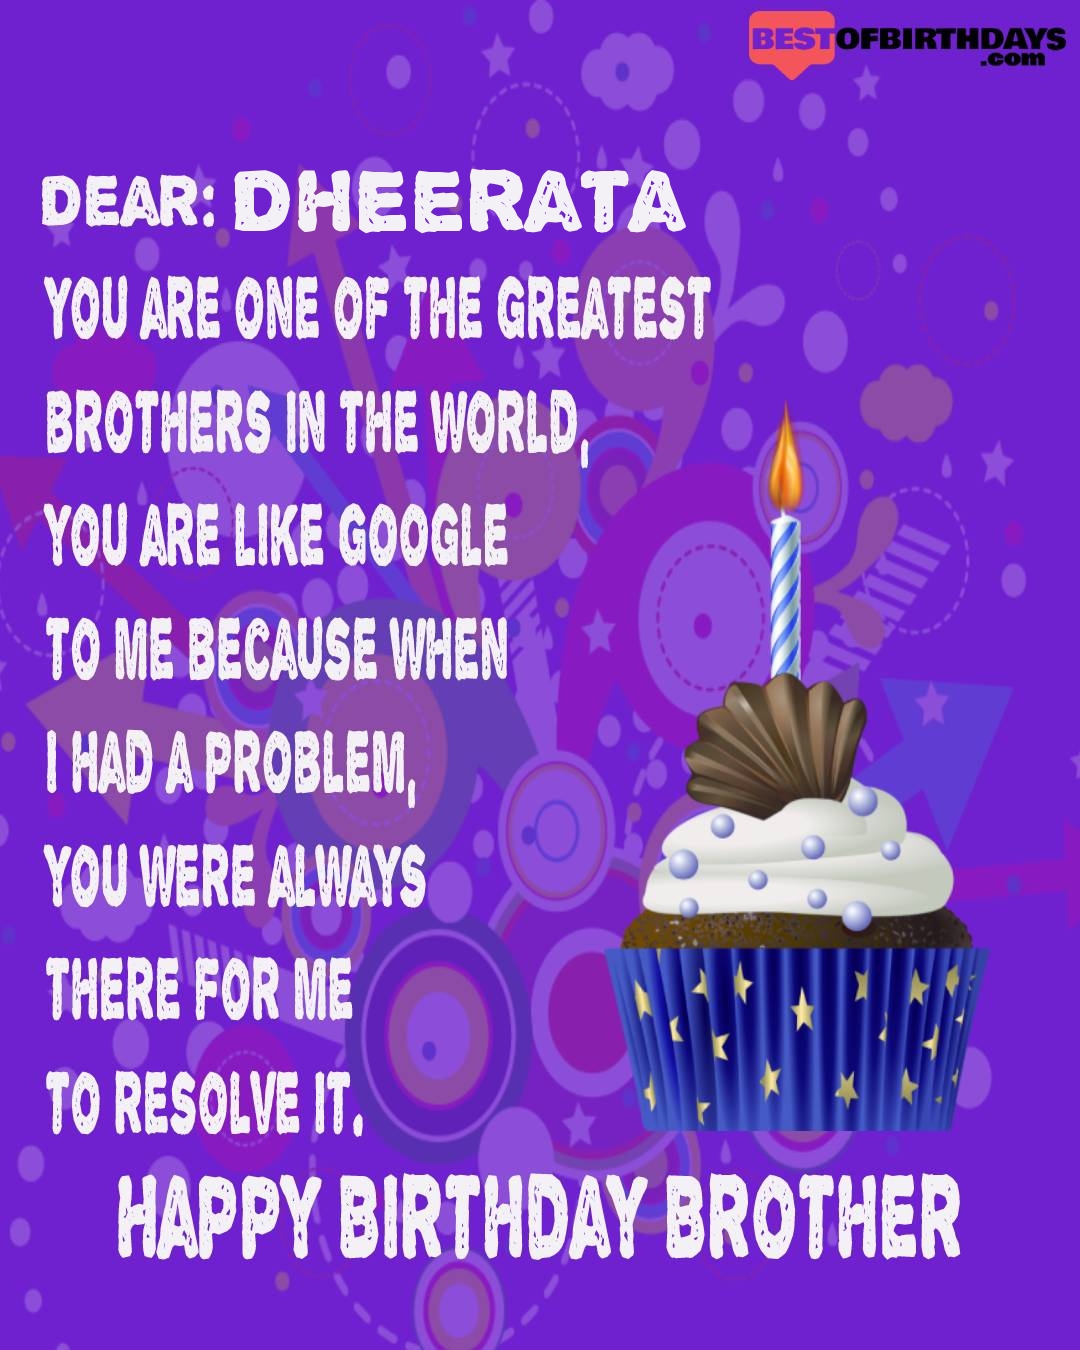 Happy birthday dheerata bhai brother bro